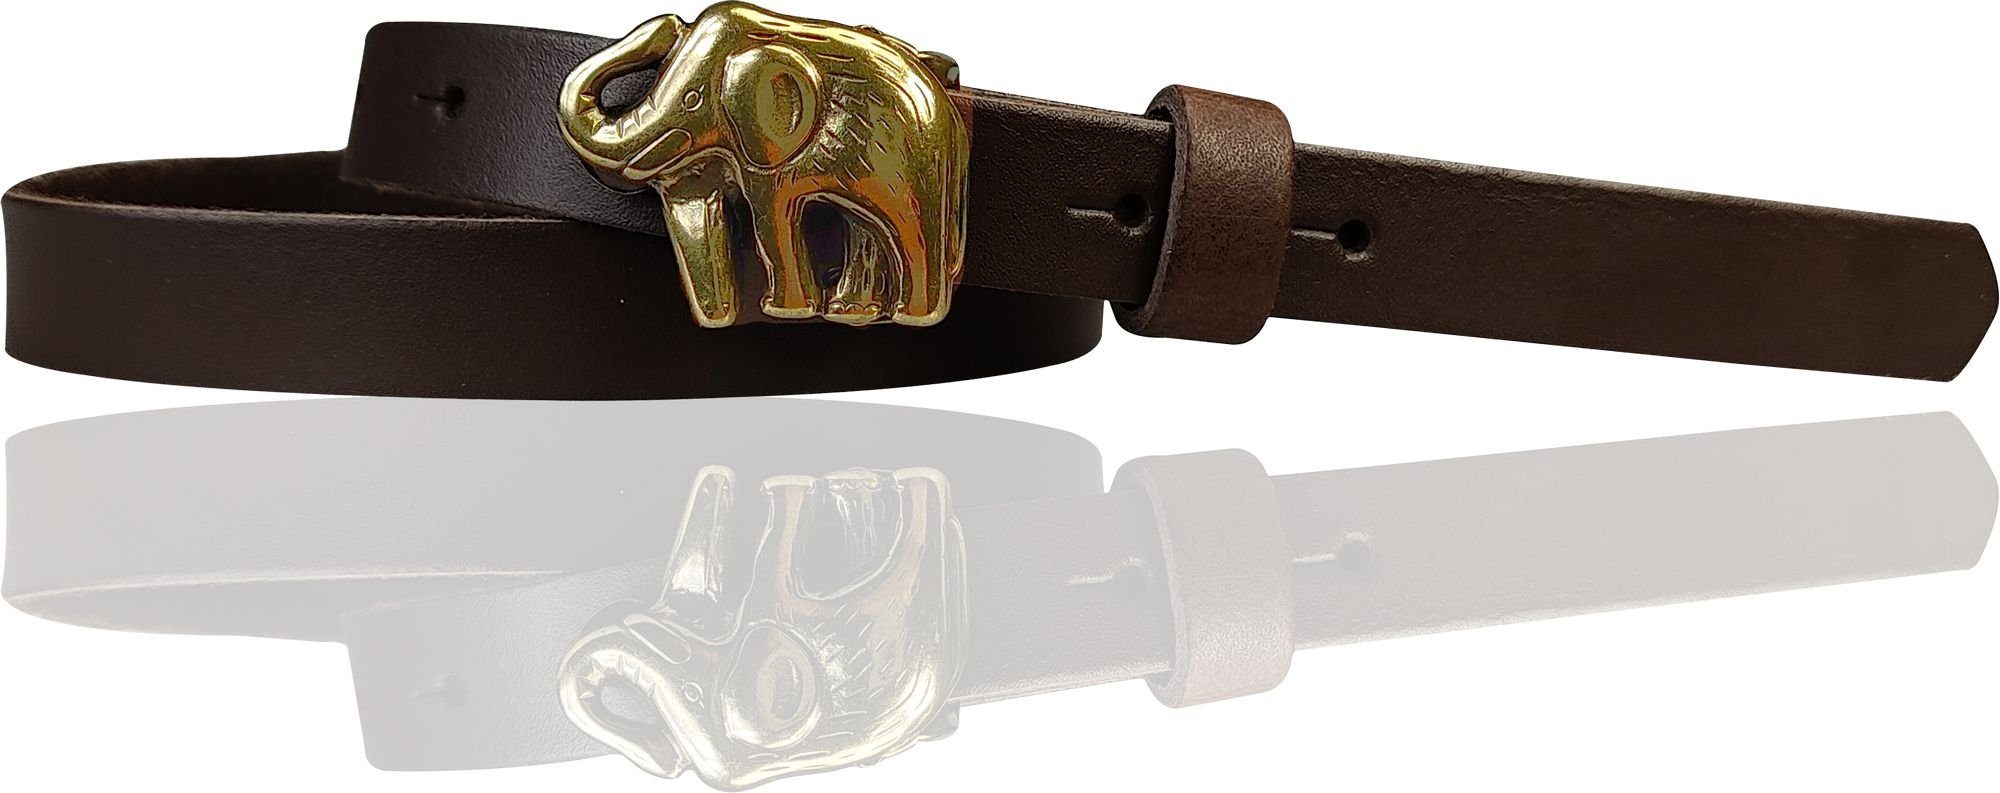 FRONHOFER Hüftgürtel 18726 Kindergürtel 2 cm Ledergürtel Dunkelbraun mit Elefantenschnalle, goldener